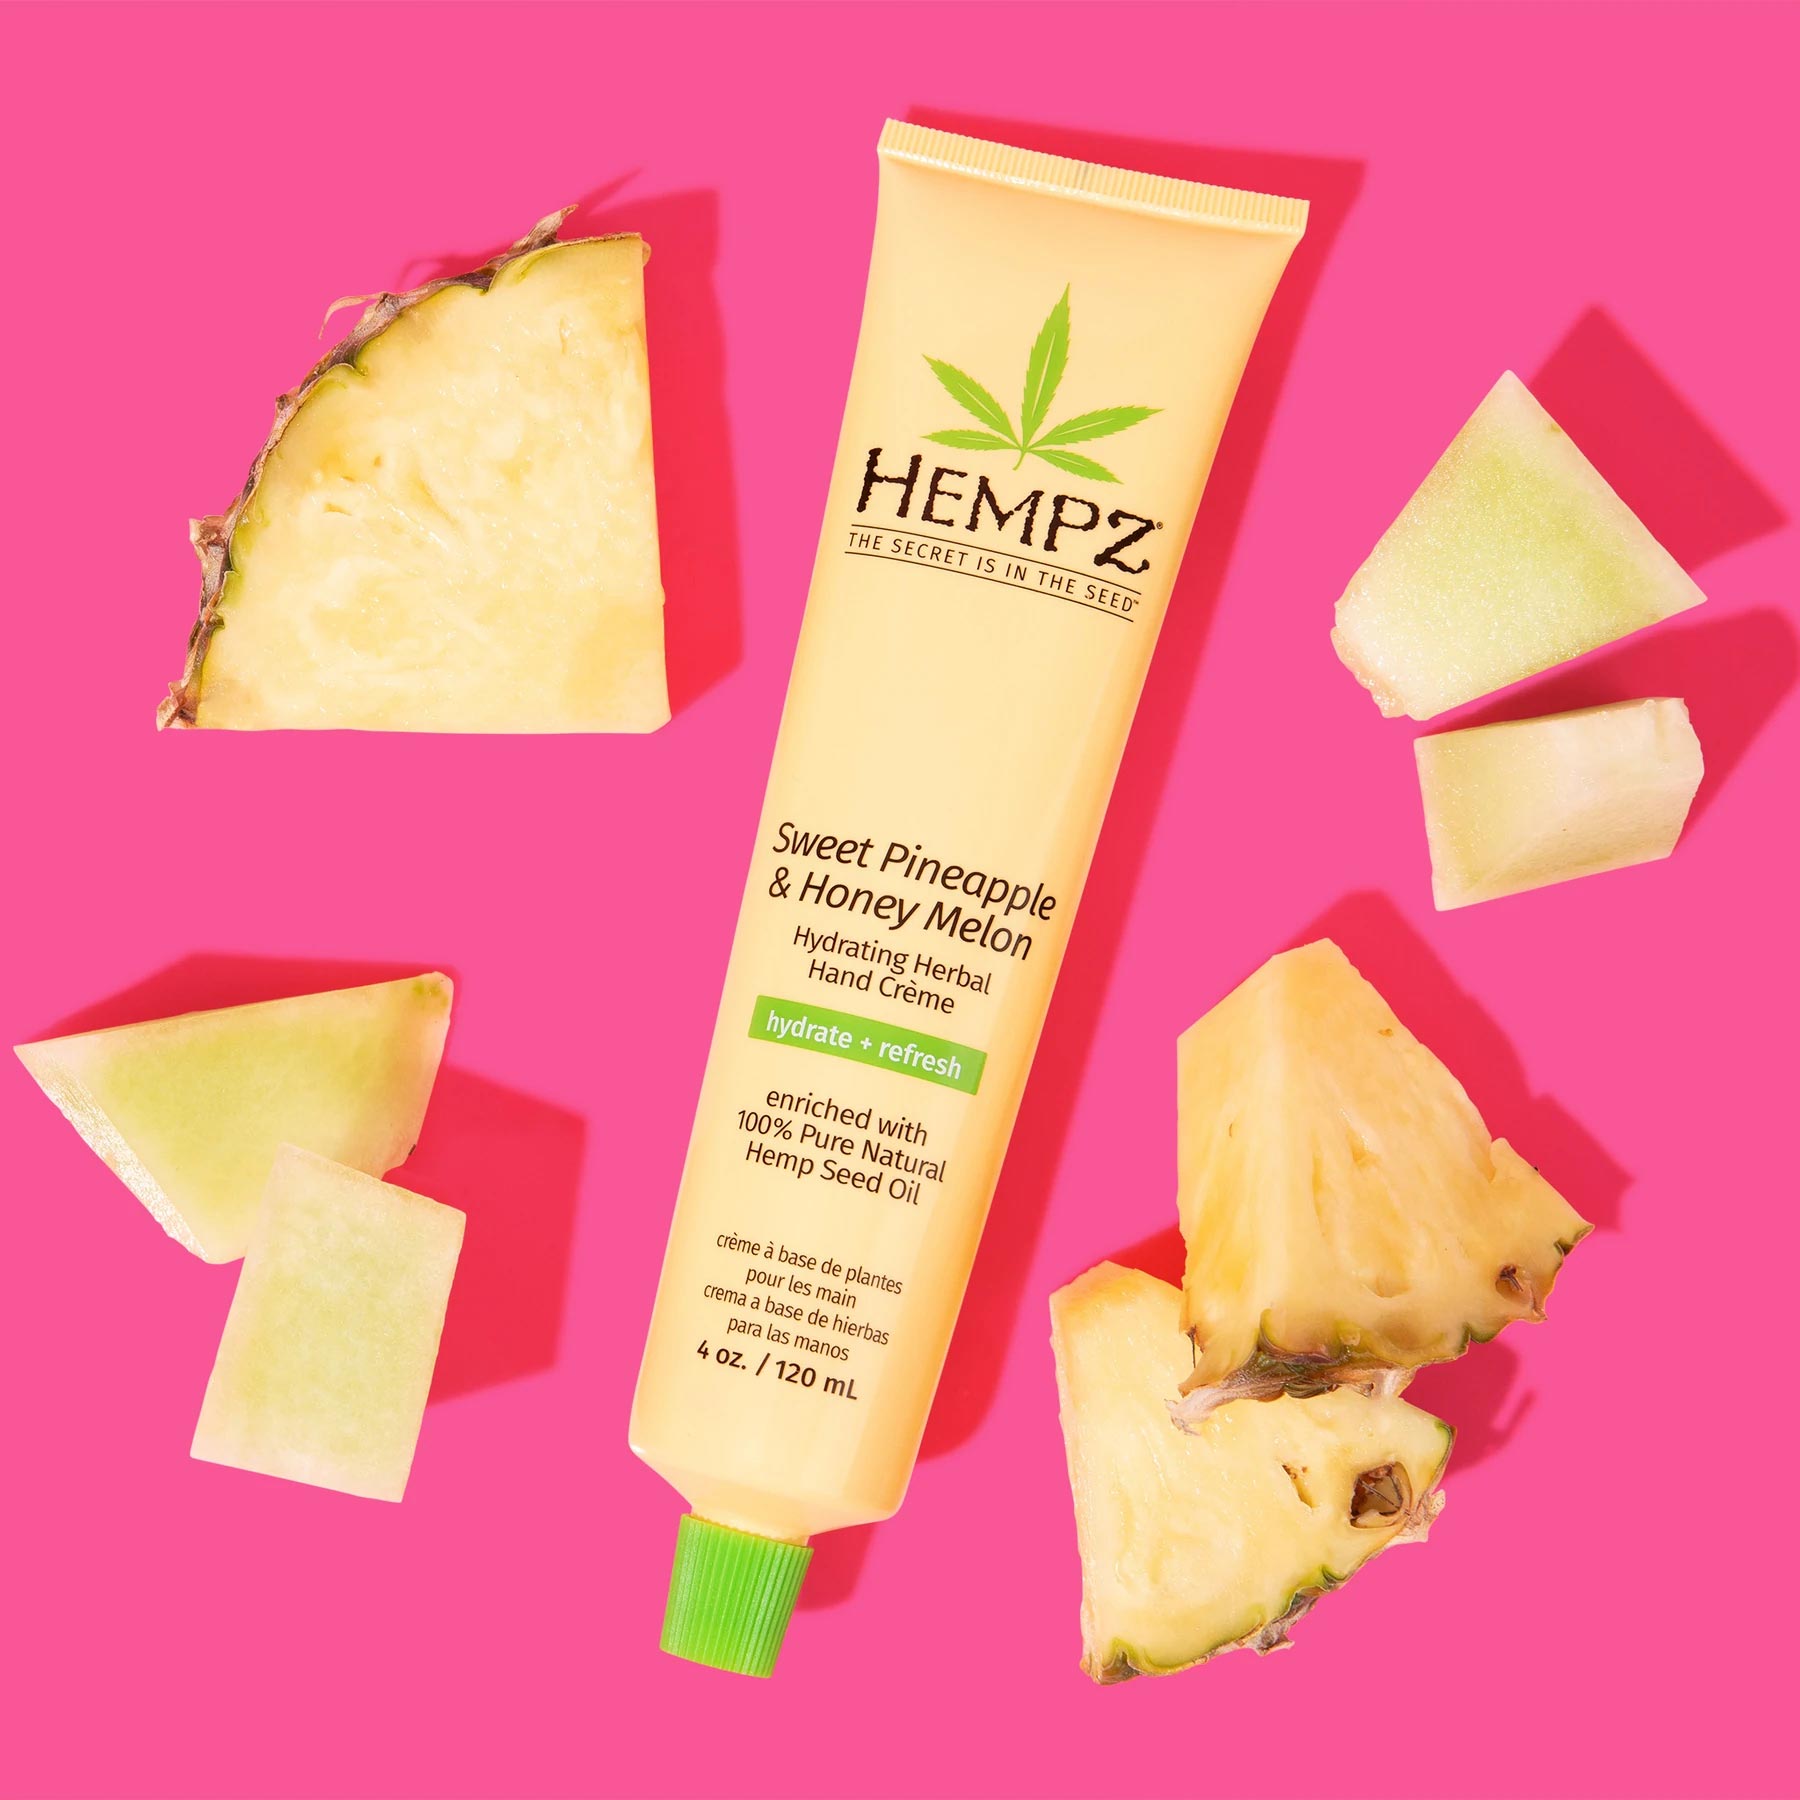 Sweet Pineapple & Honey Melon Hydrating Herbal Hand Creme